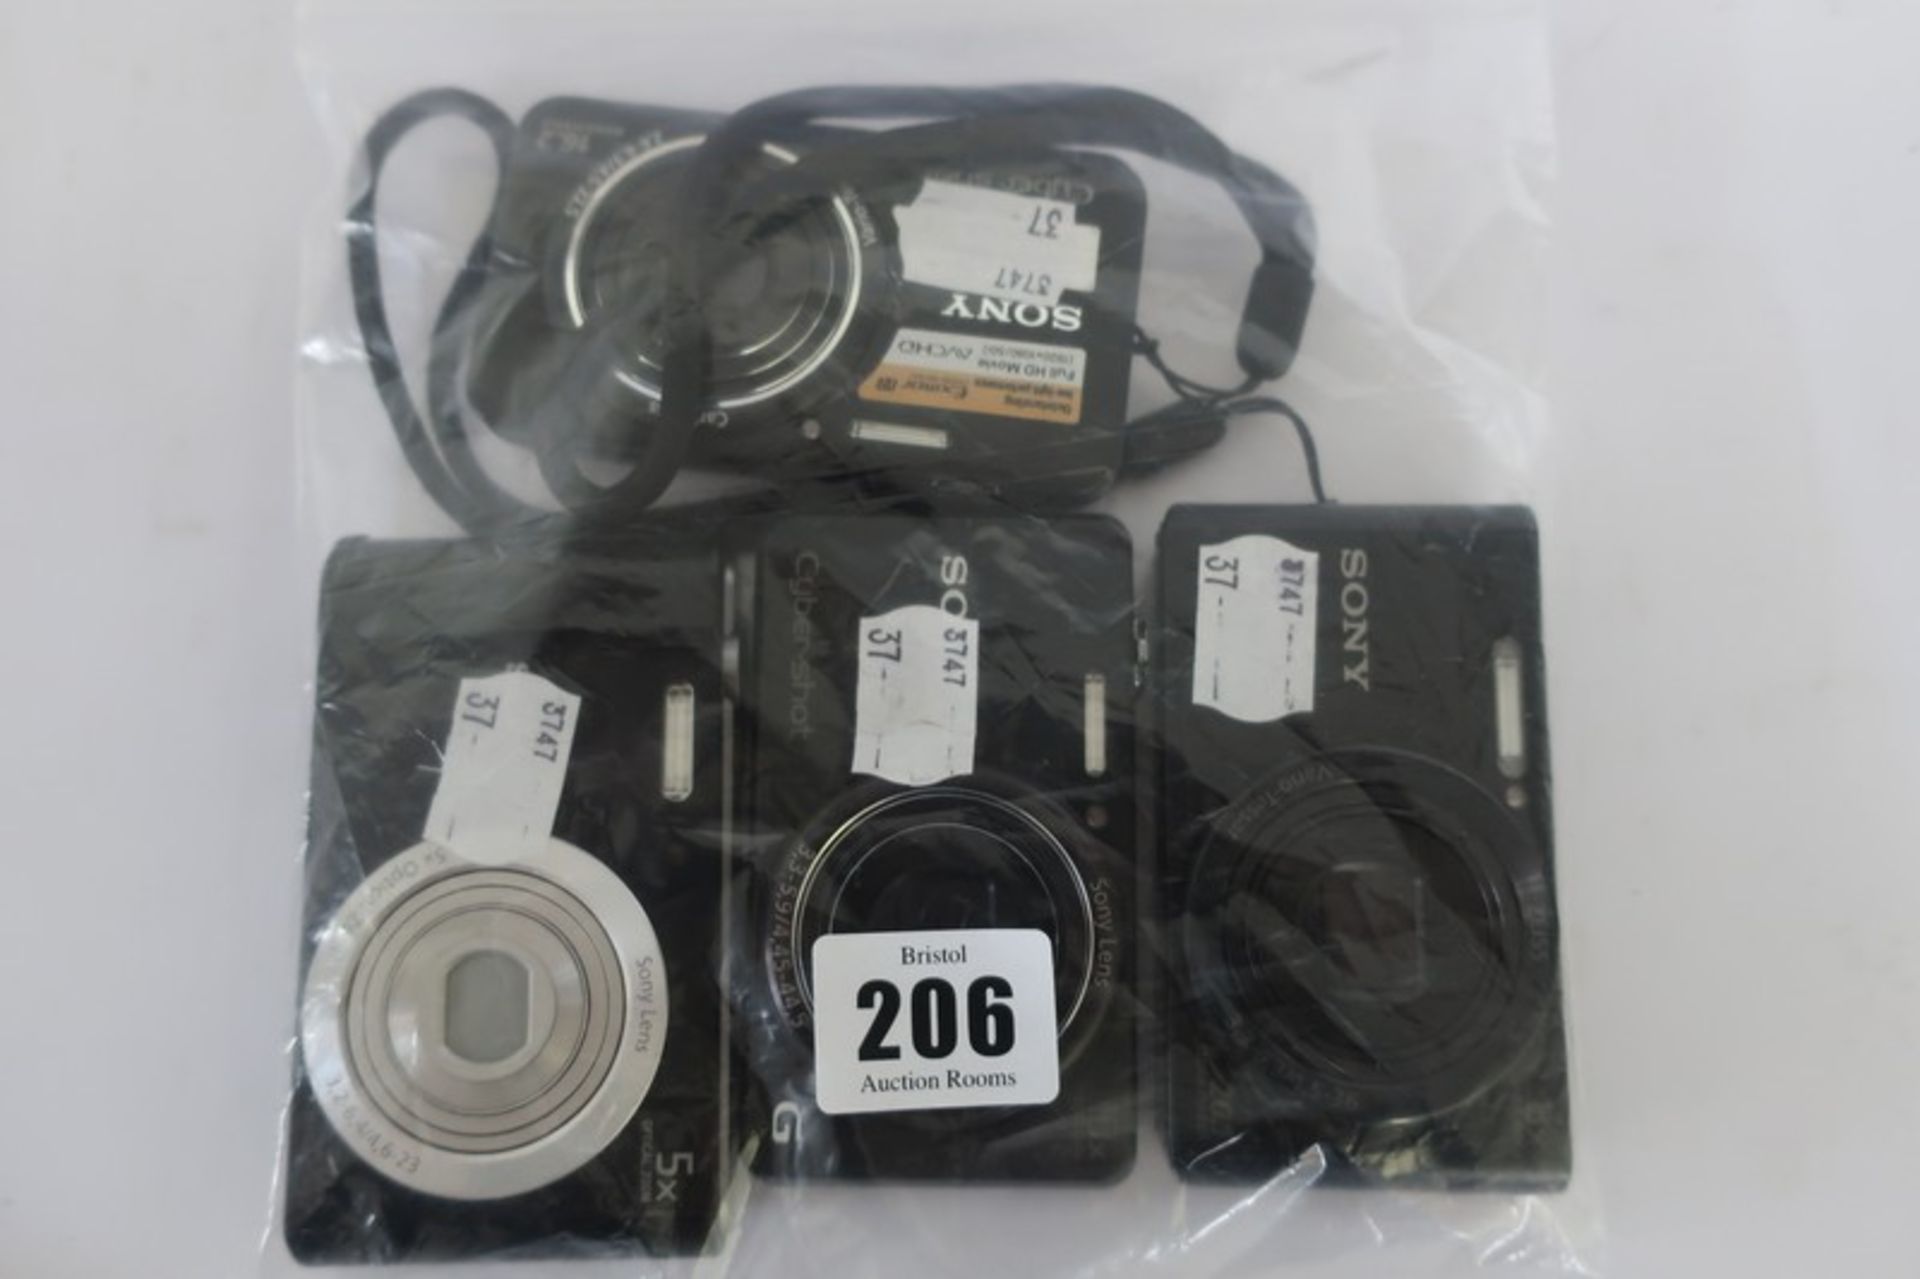 Four Sony compact digital cameras; CyberShot DSCW830, CyberShot DSC-WX200, CyberShot DSC-WX7 and a